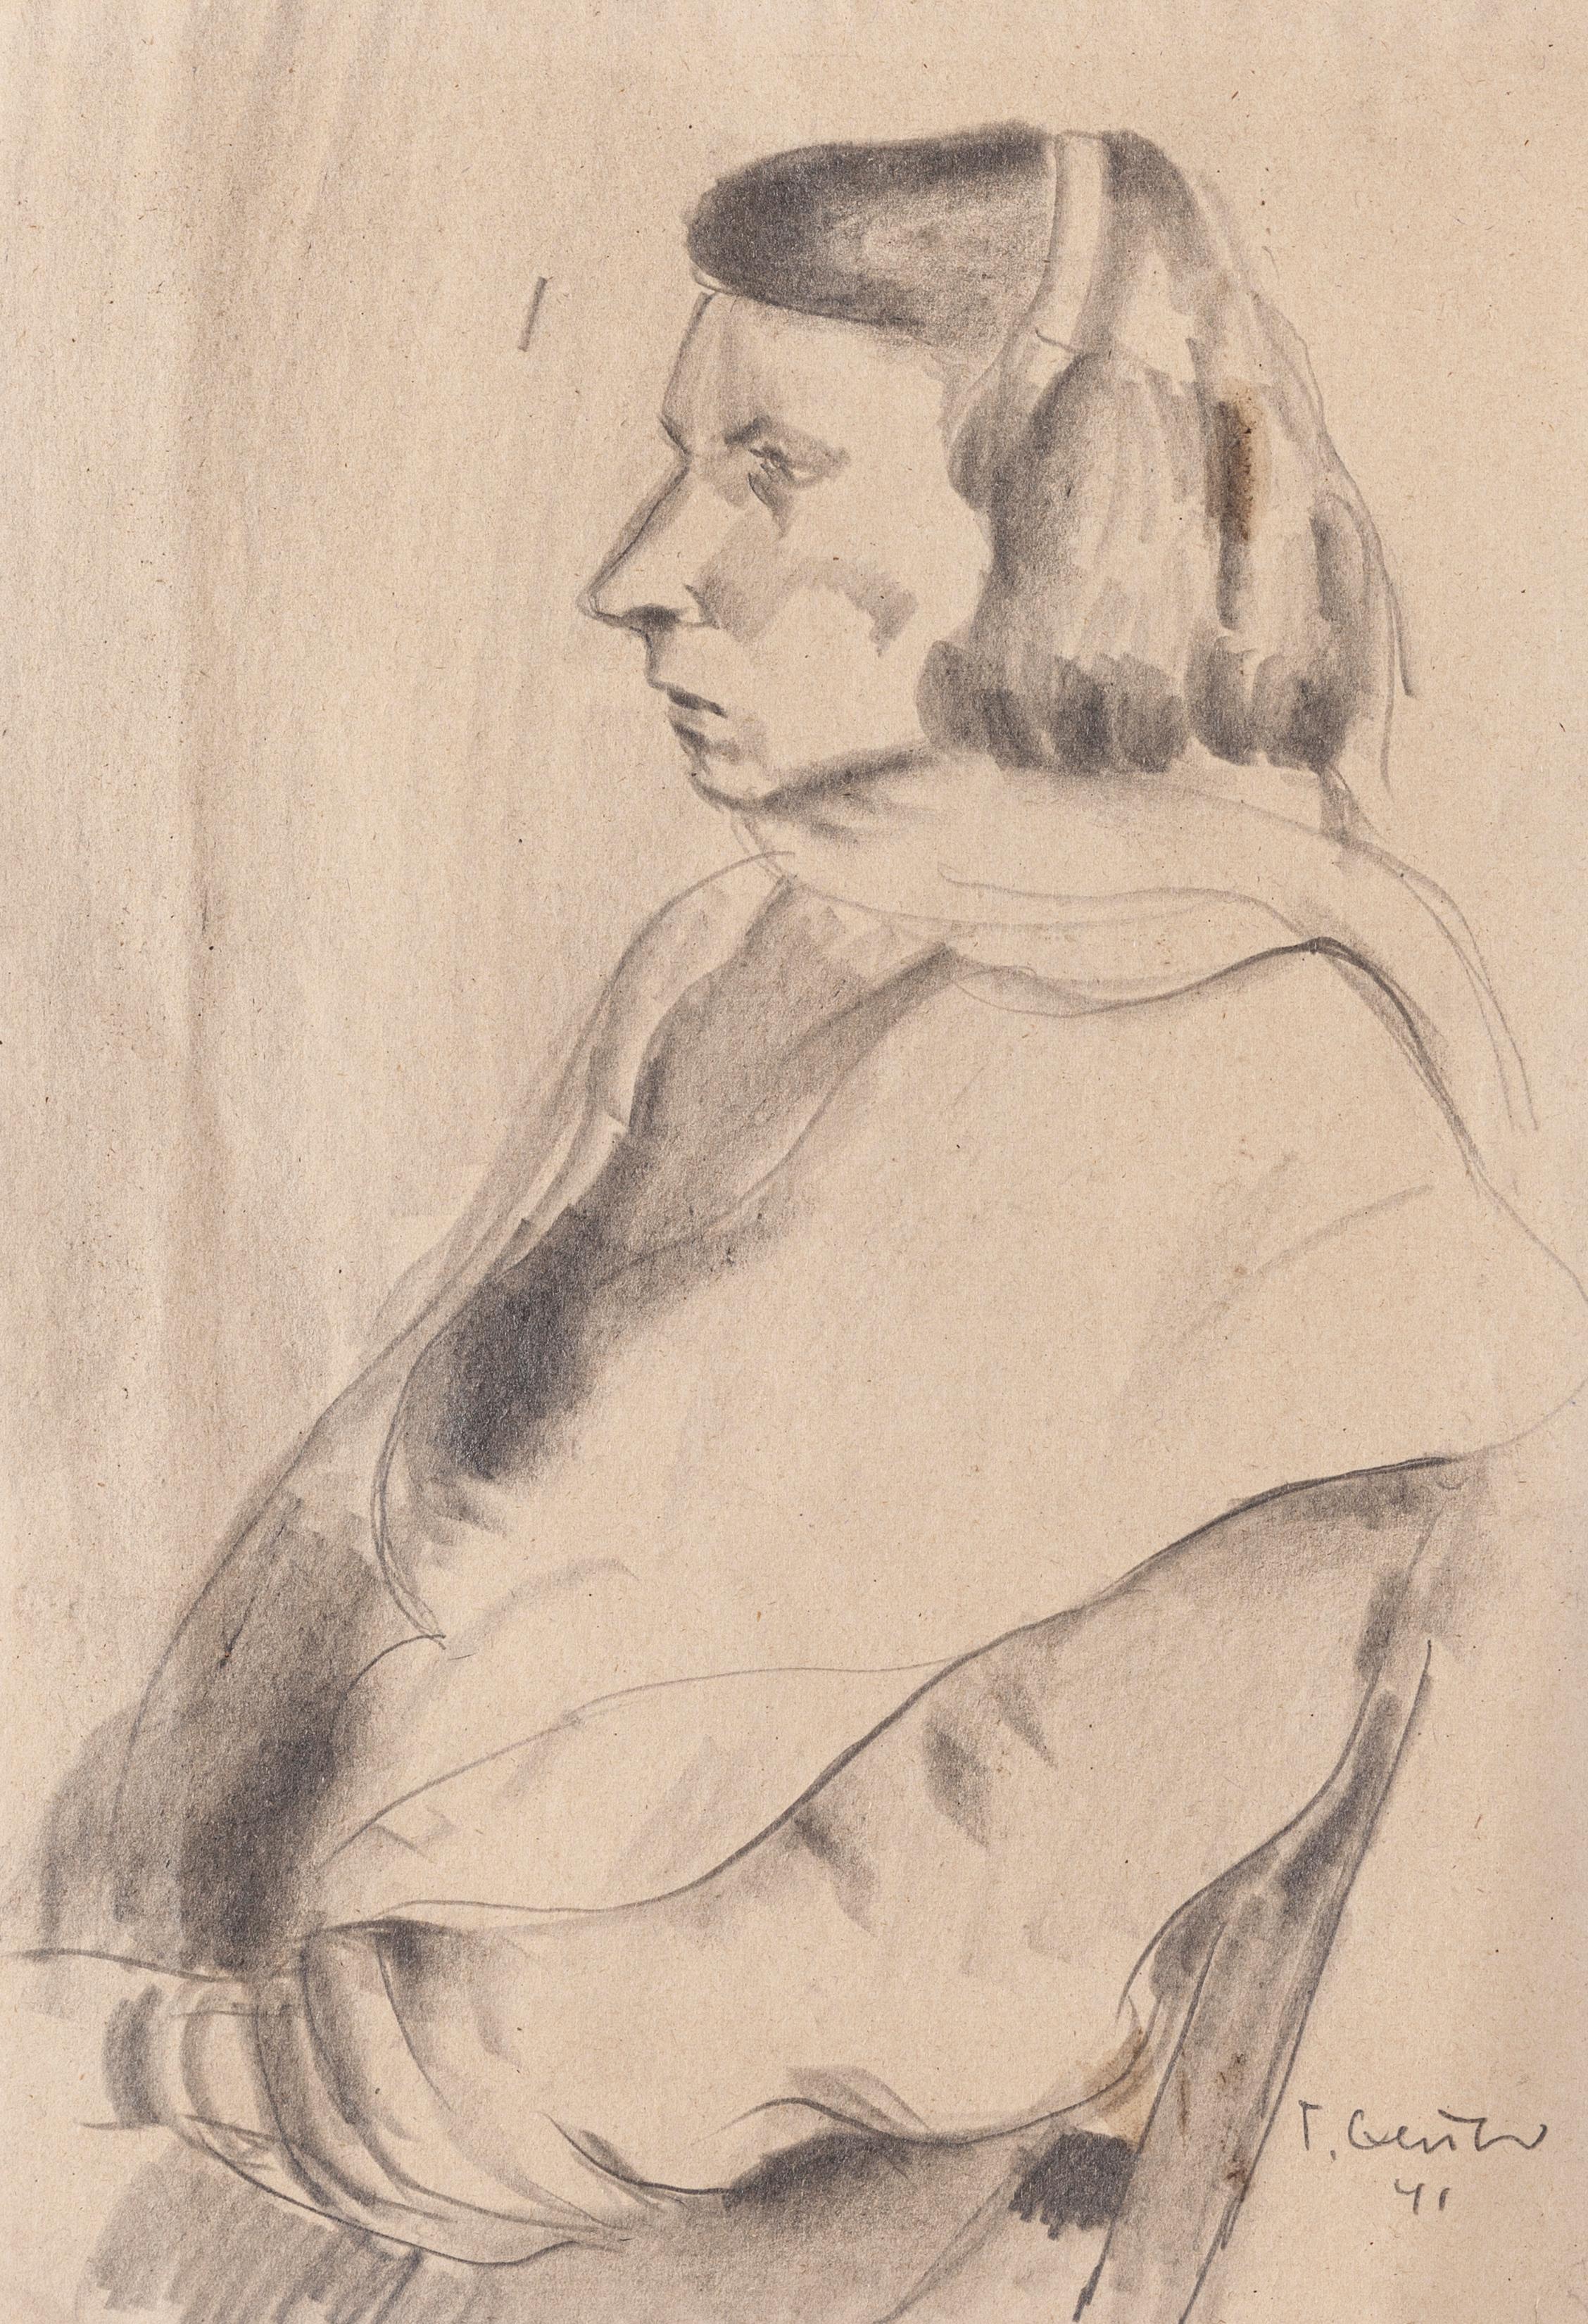 Portrait - Original Pencil Drawing by T. Gertner - 1941 - Art by Tibor Gertner